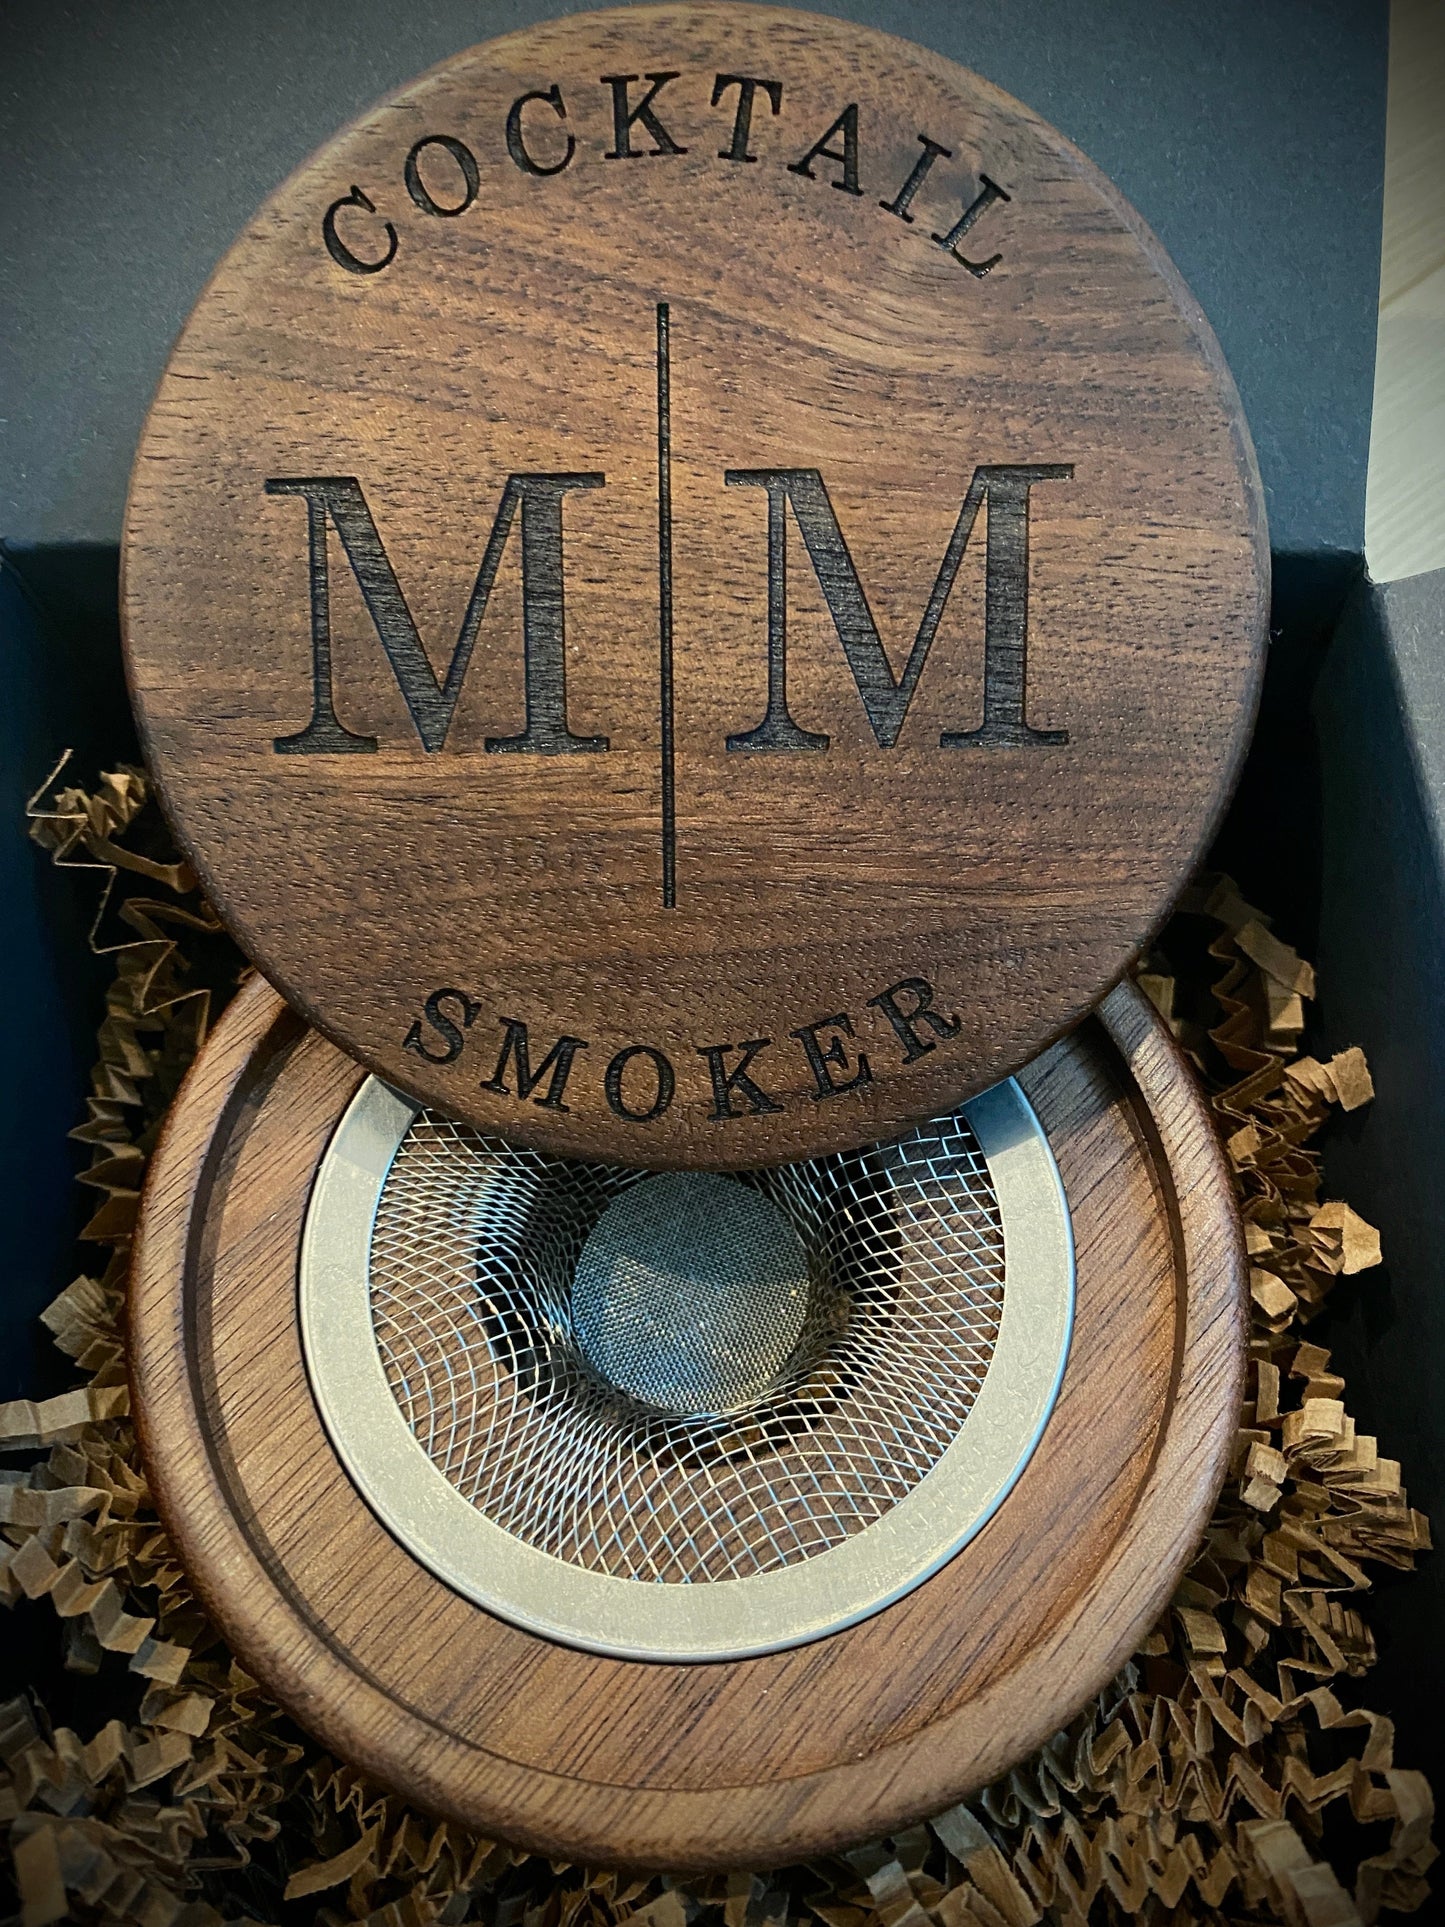 Cocktail Smoker w/ Initials